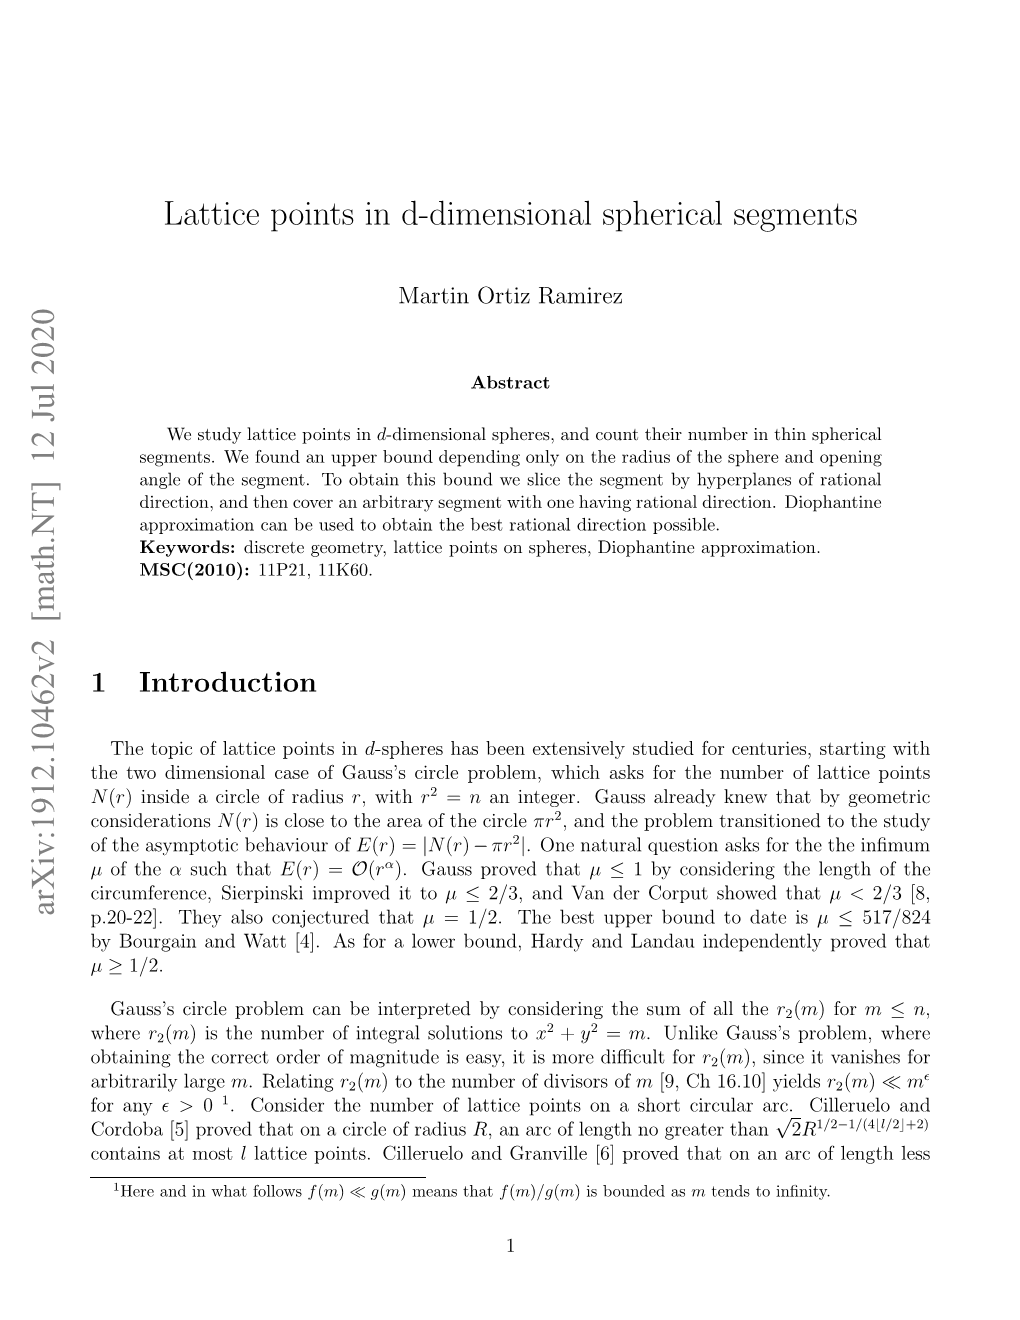 Lattice Points in Spherical Segments